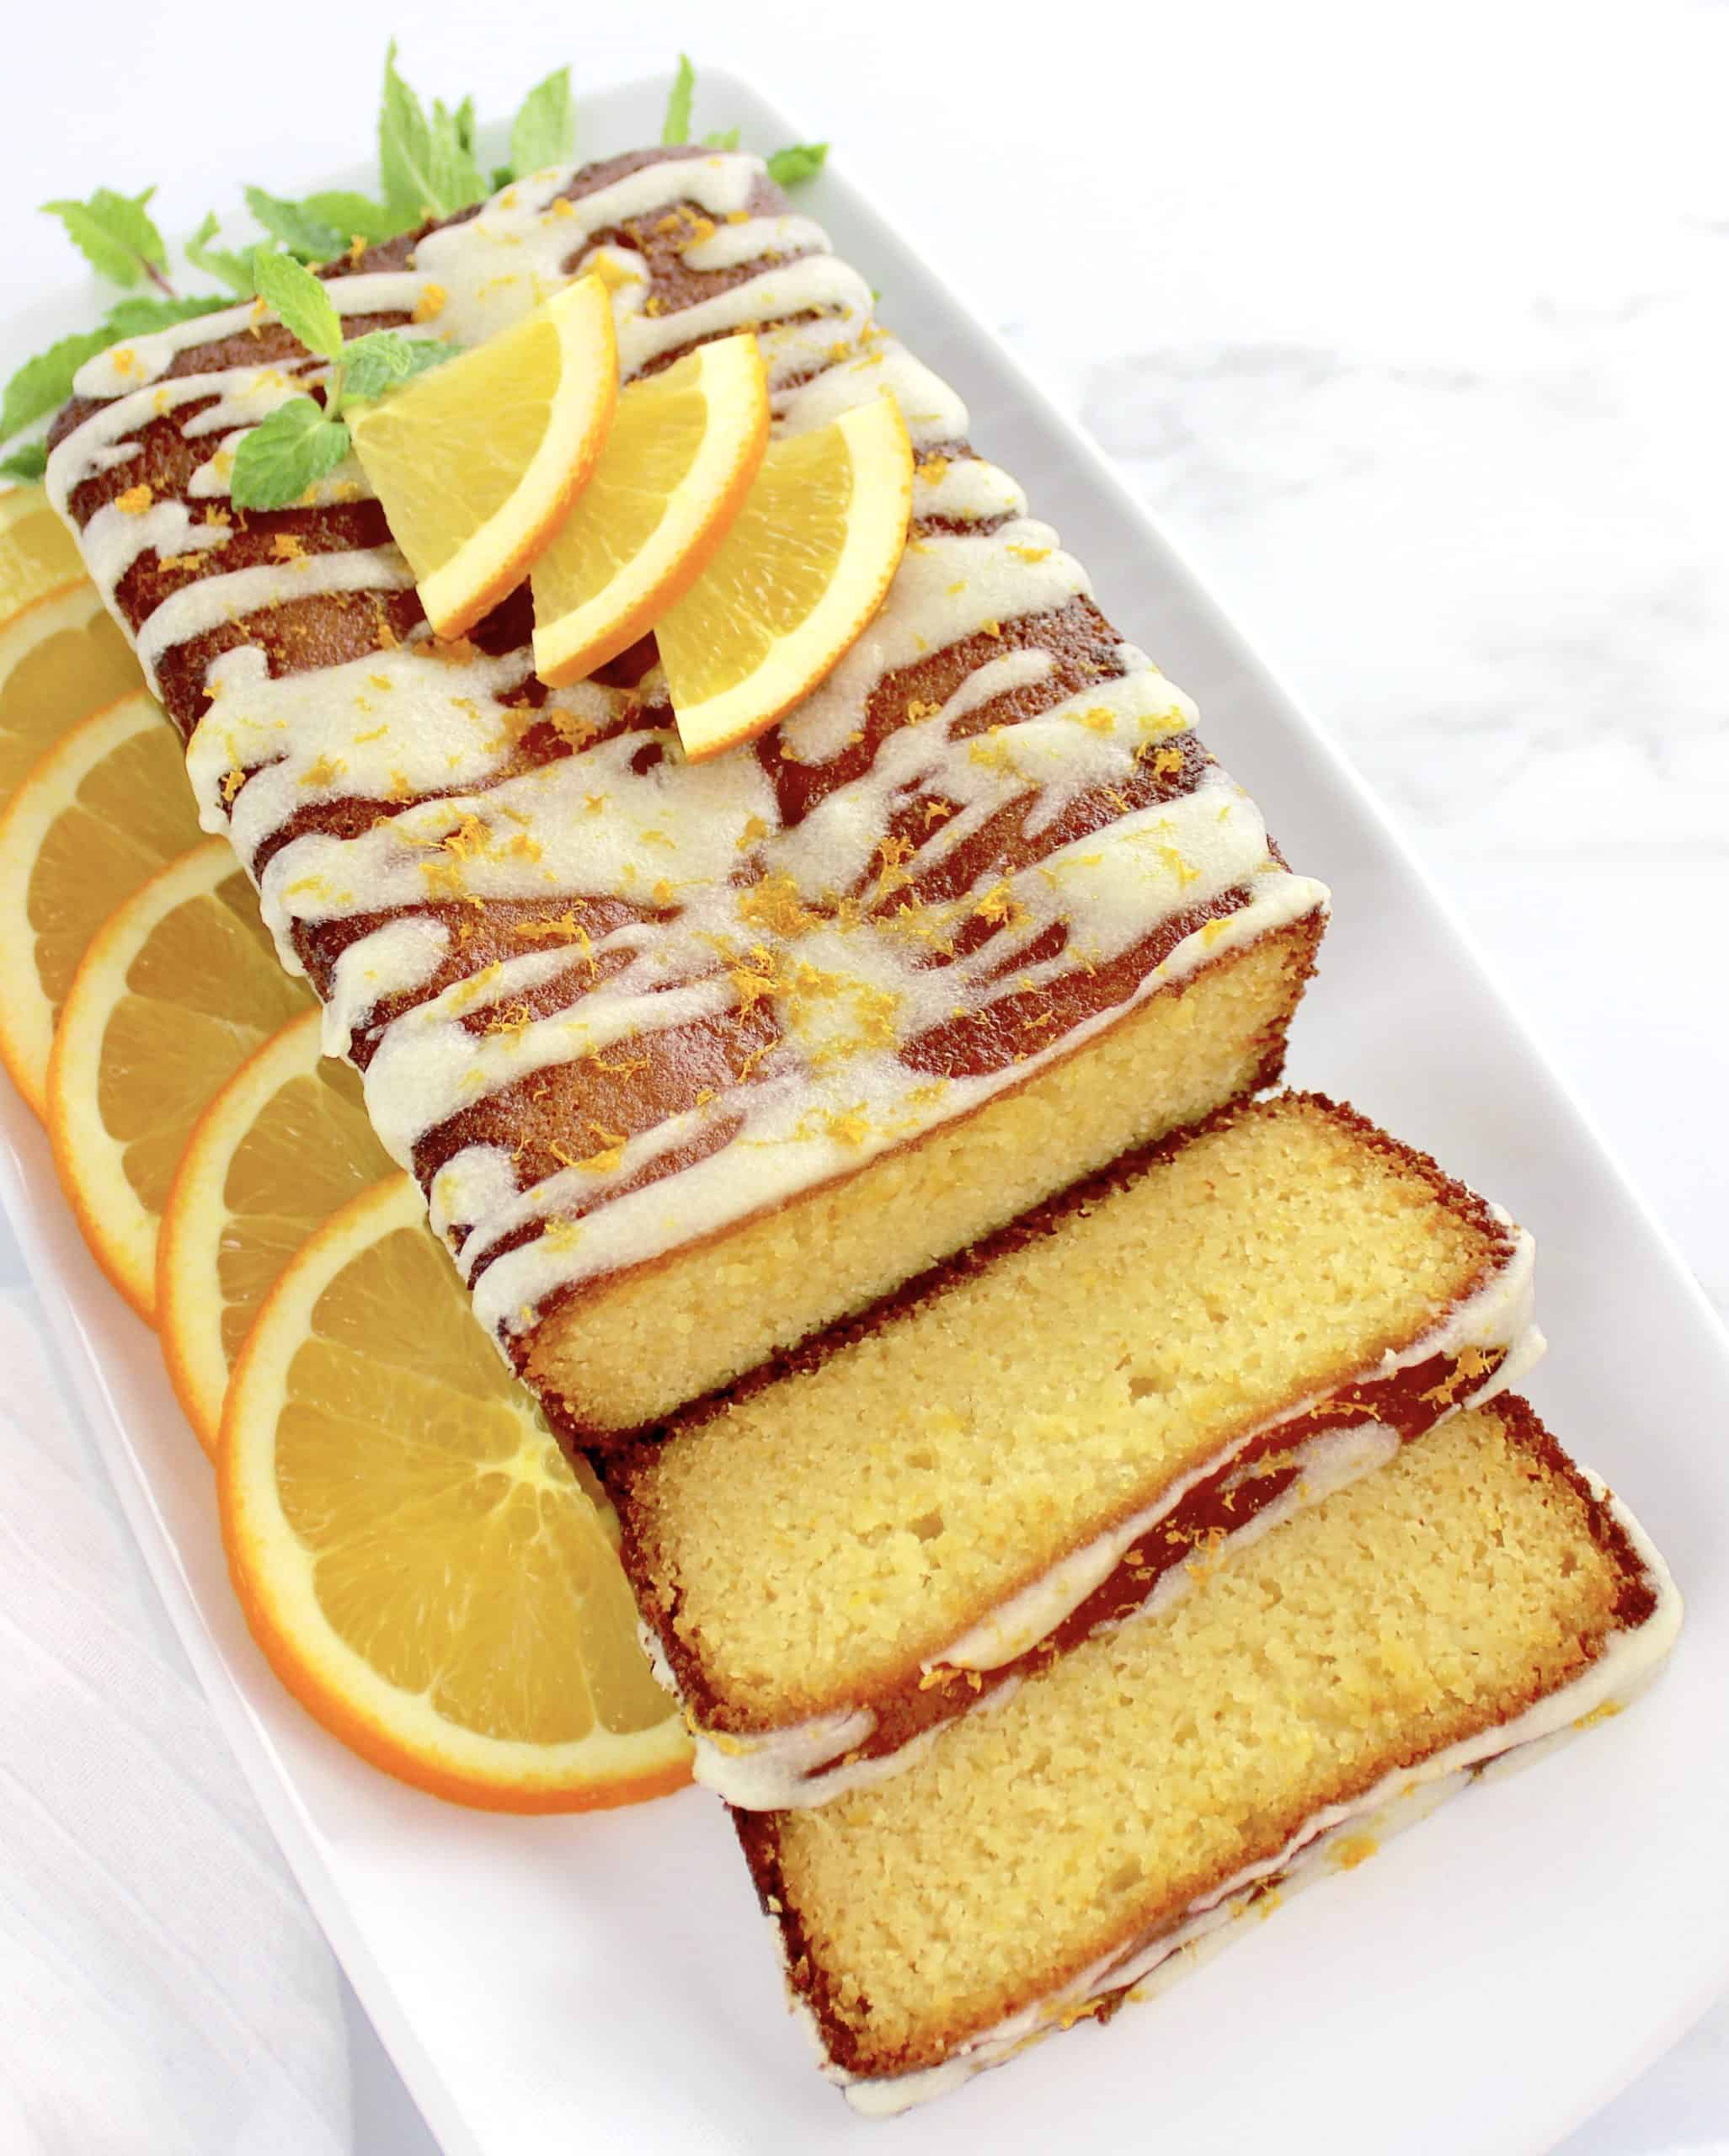 Keto Orange Pound Cake sliced on white plate with oranges